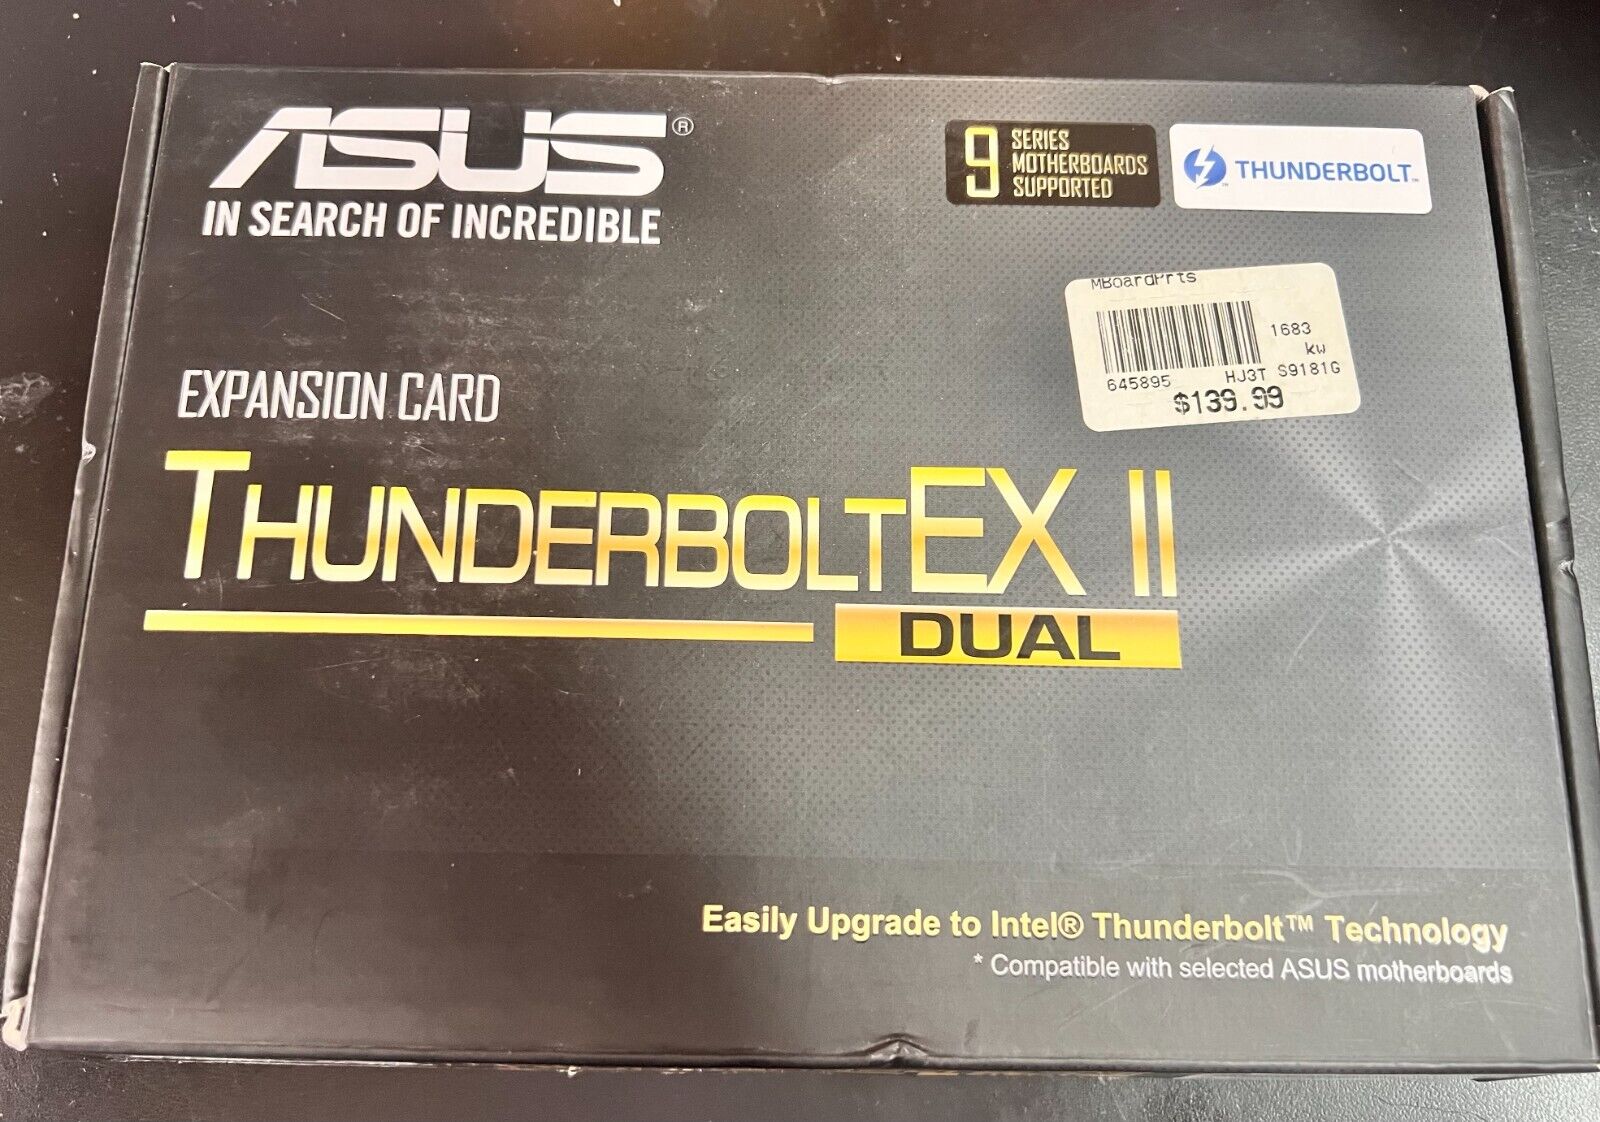 ASUS ThunderboltEX II Dual Expansion Card - Thunderbolt 2 PCIE 2.0 x4 7665